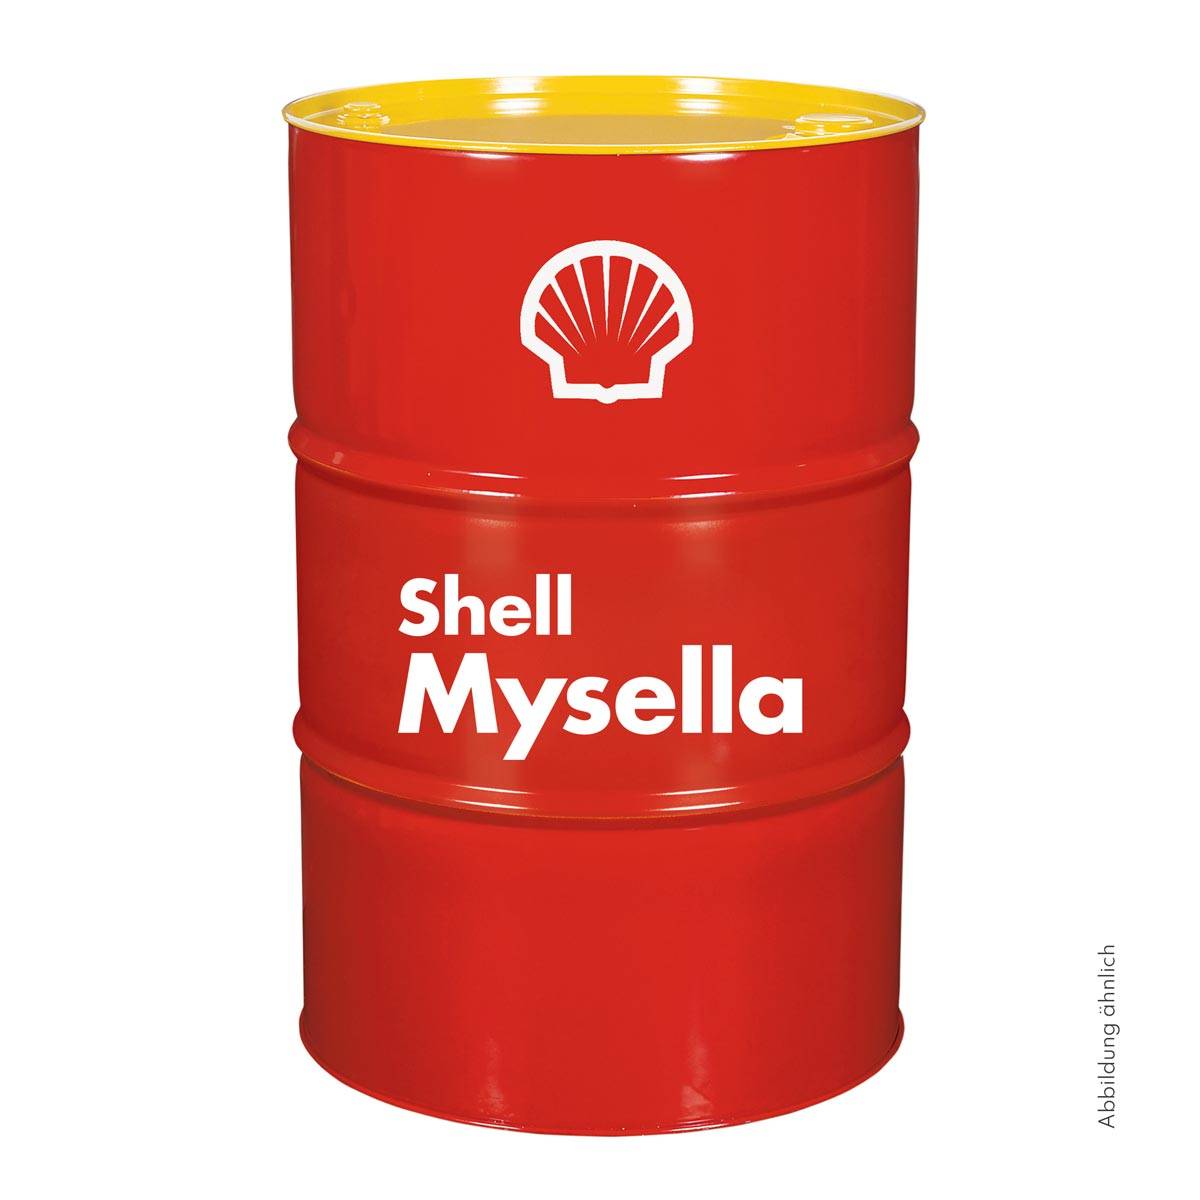 Shell Mysella S7 N Ultra